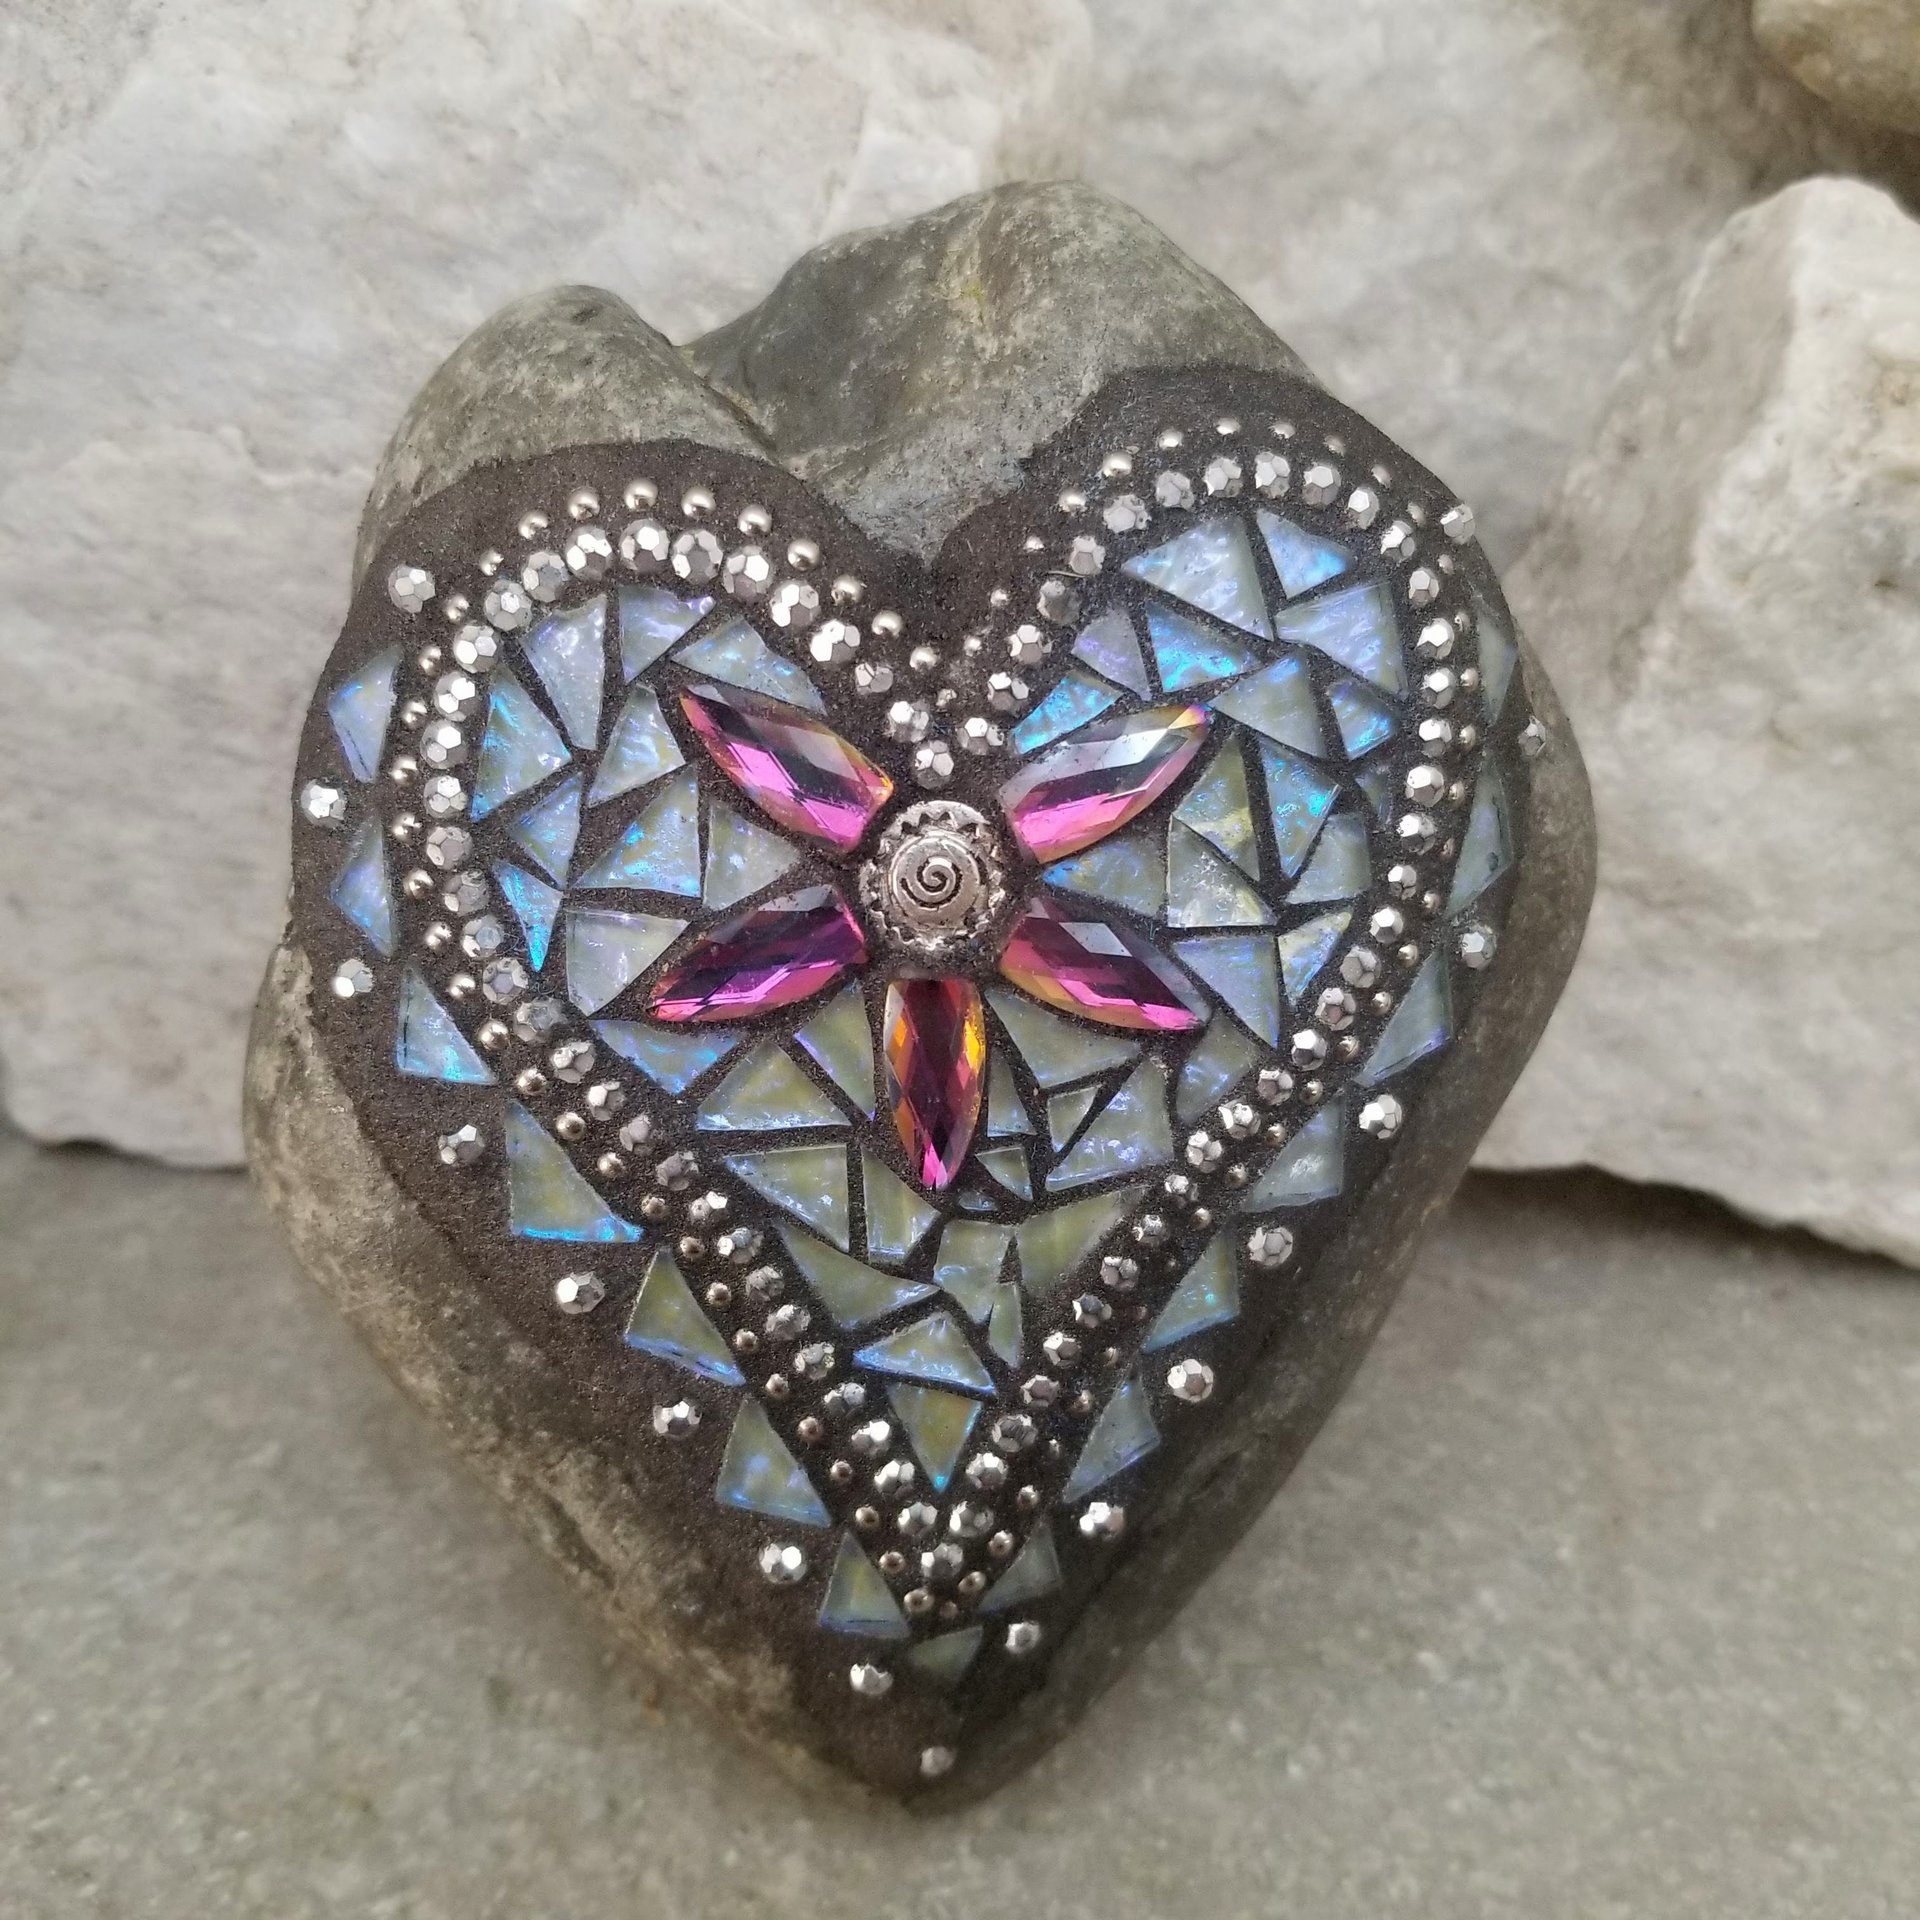 Iridescent Mosaic Heart Garden Stone, GardnerGift, Garden Decor